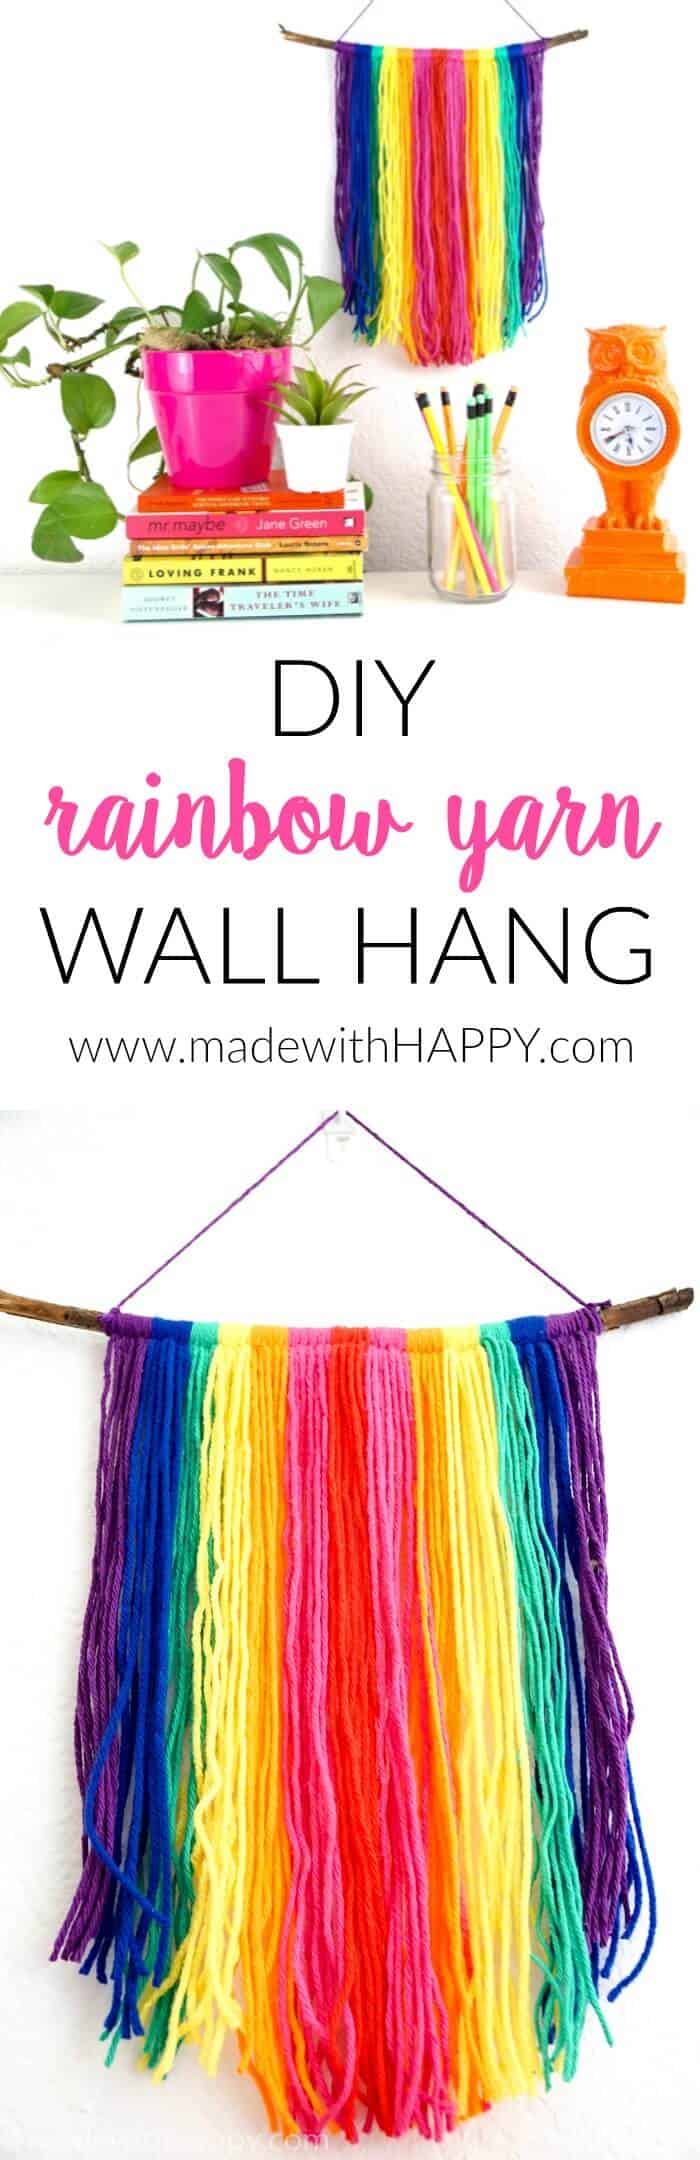 DIY Yarn Wall Hang Tapestry Tutorial. Simple Rainbow Macrame. Colorful Yarn Wall Hanging Tapestry Tutorial. www.madewithhappy.com